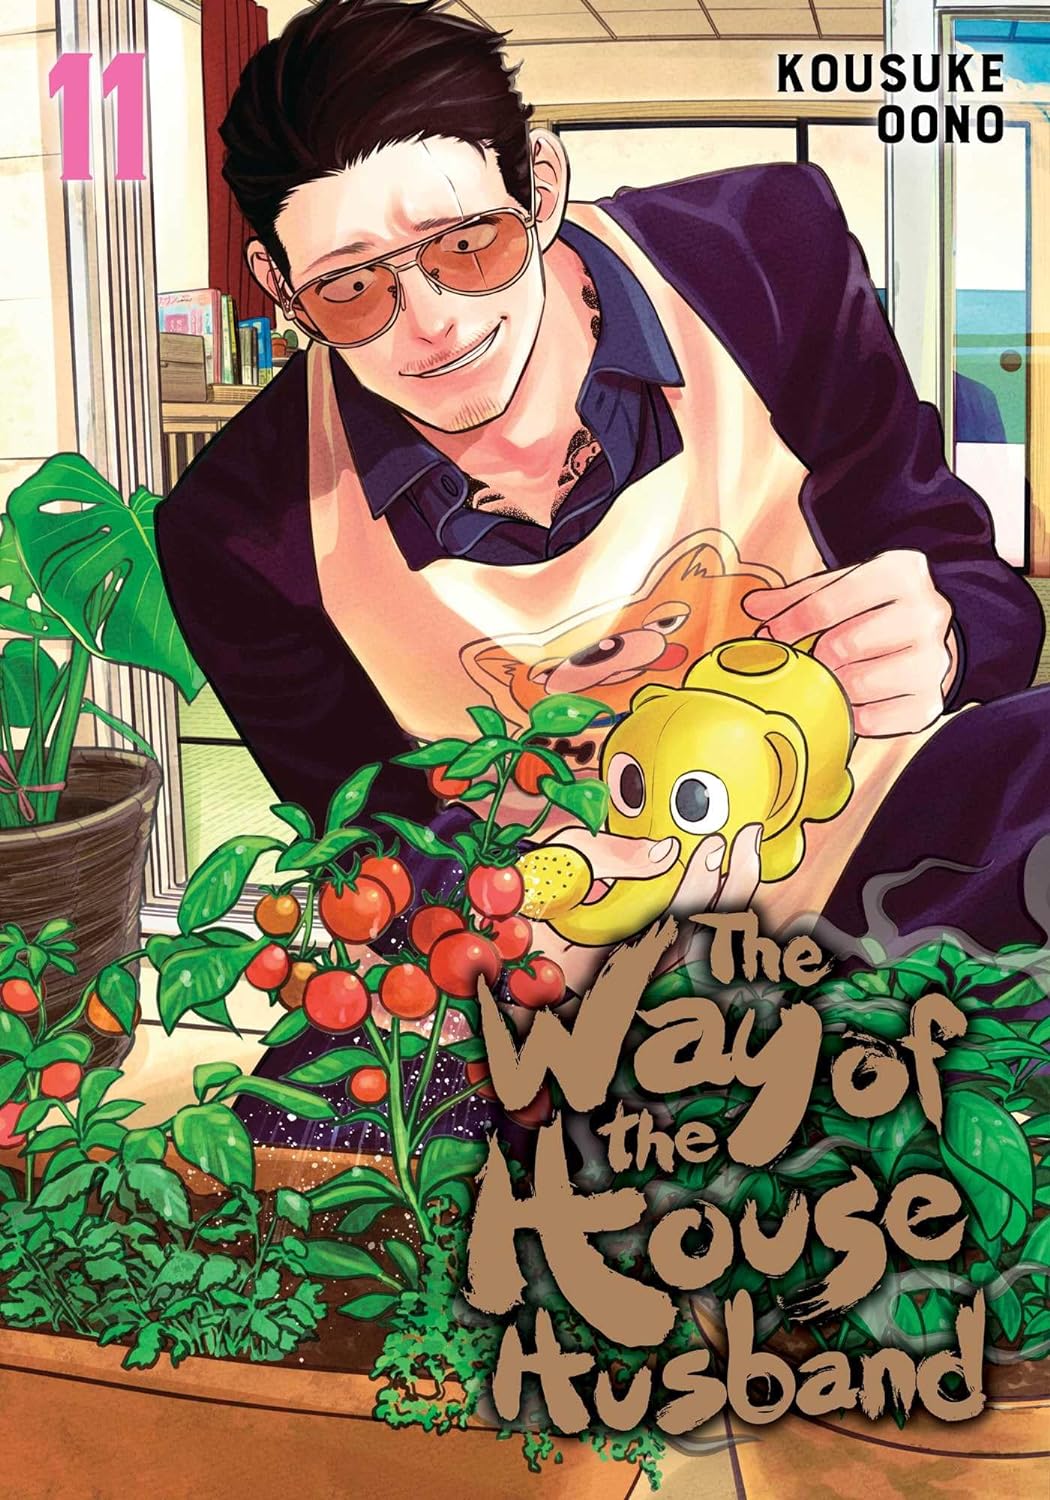 Way of the Househusband Manga Volume 11